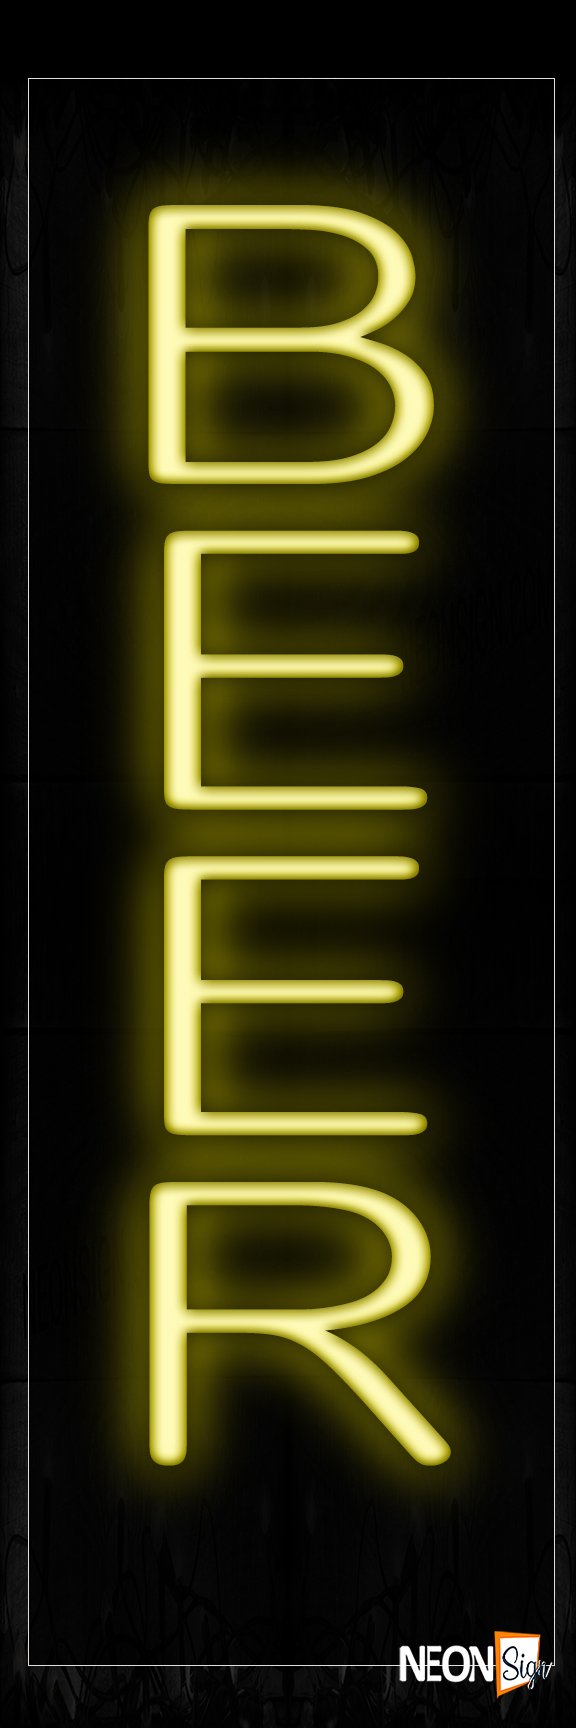 Image of Beer Neon Signs- Vertical